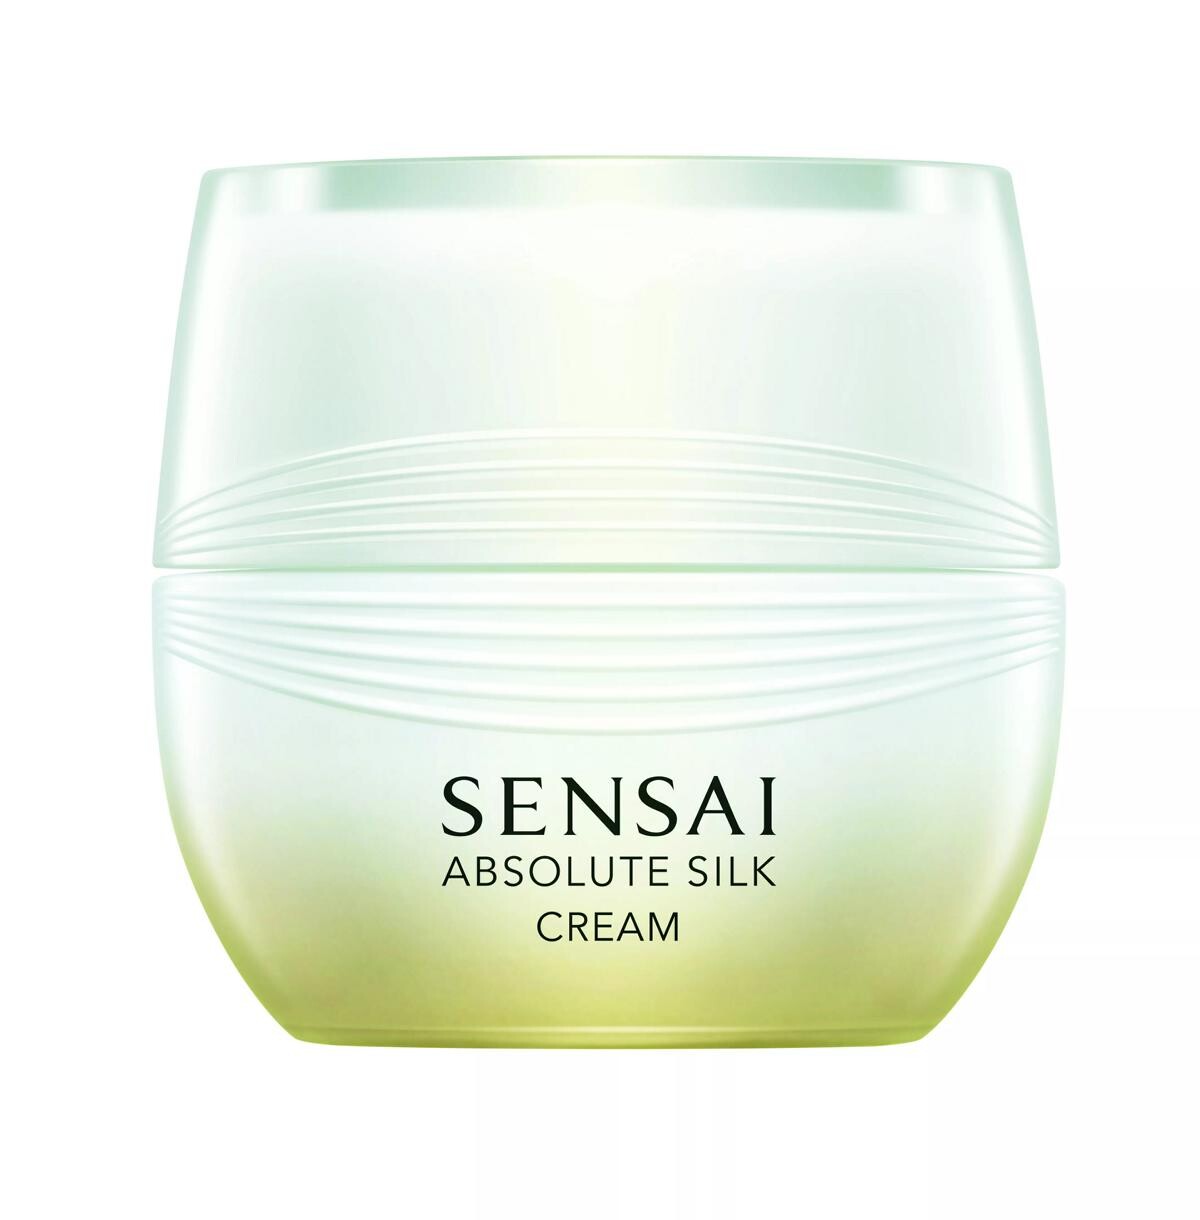 Tagescreme Sensai Absolute Silk Cream 40ml kaufen